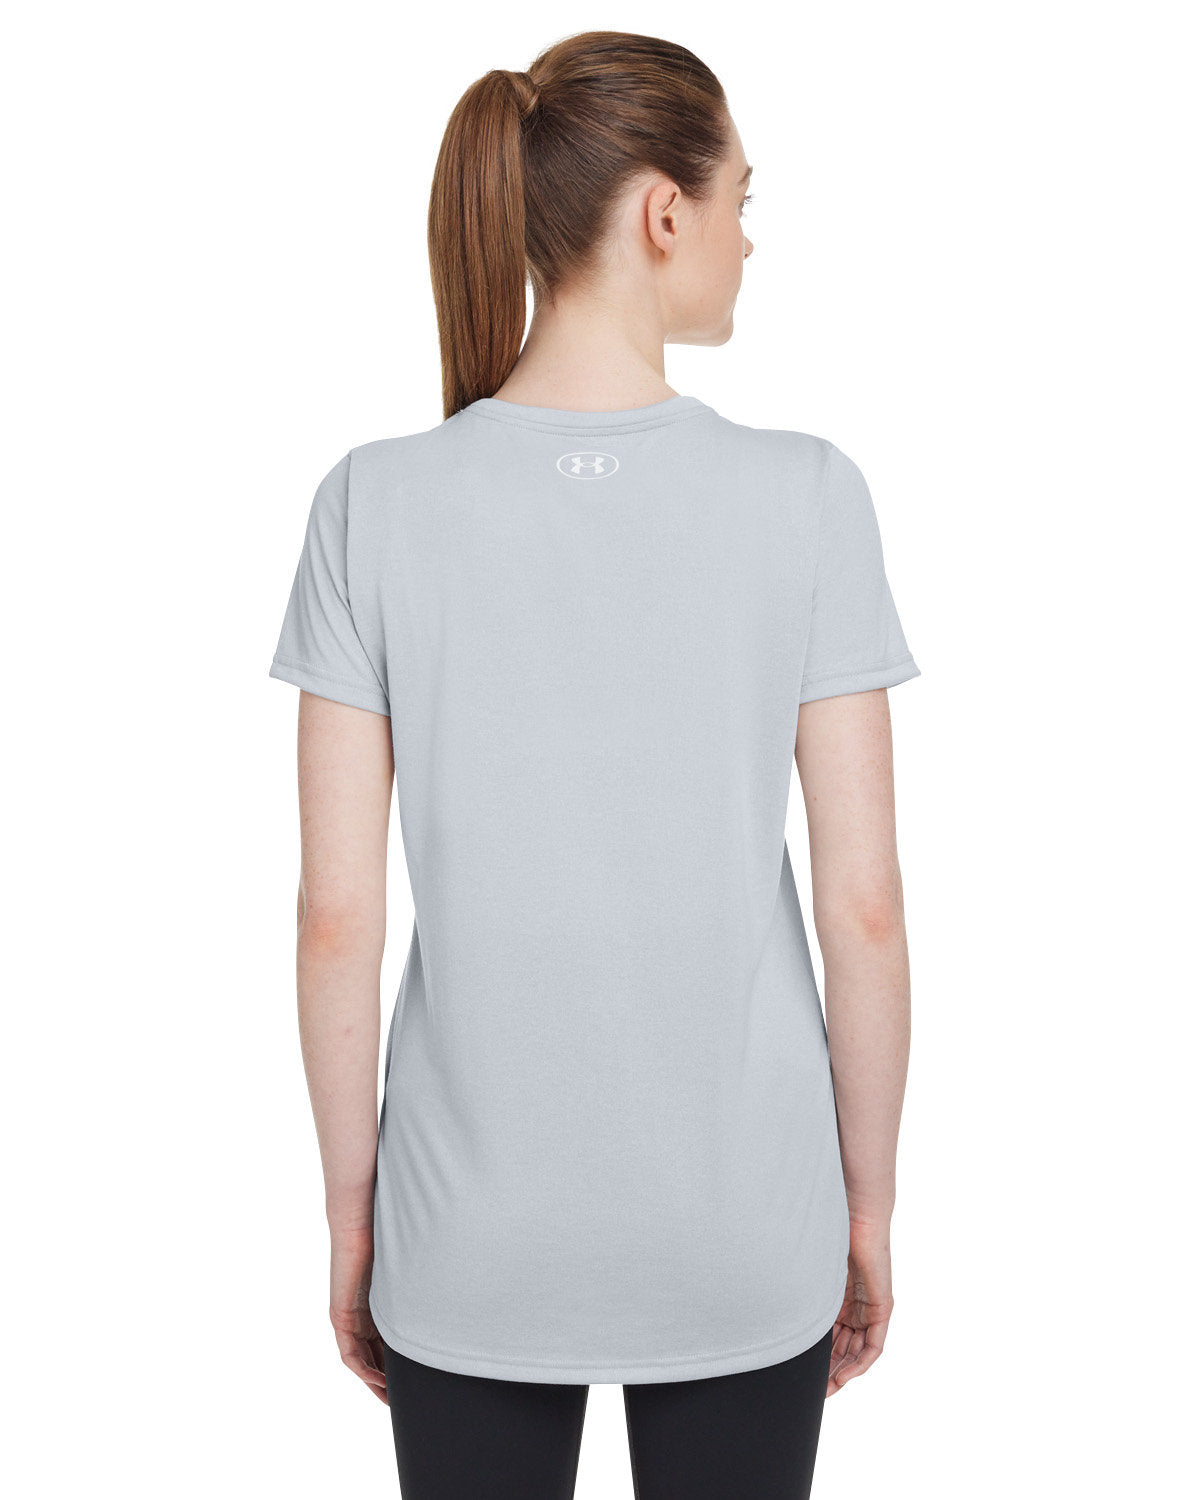 Under Armour Ladies Tech Custom T-Shirts, Mid Grey Light, White